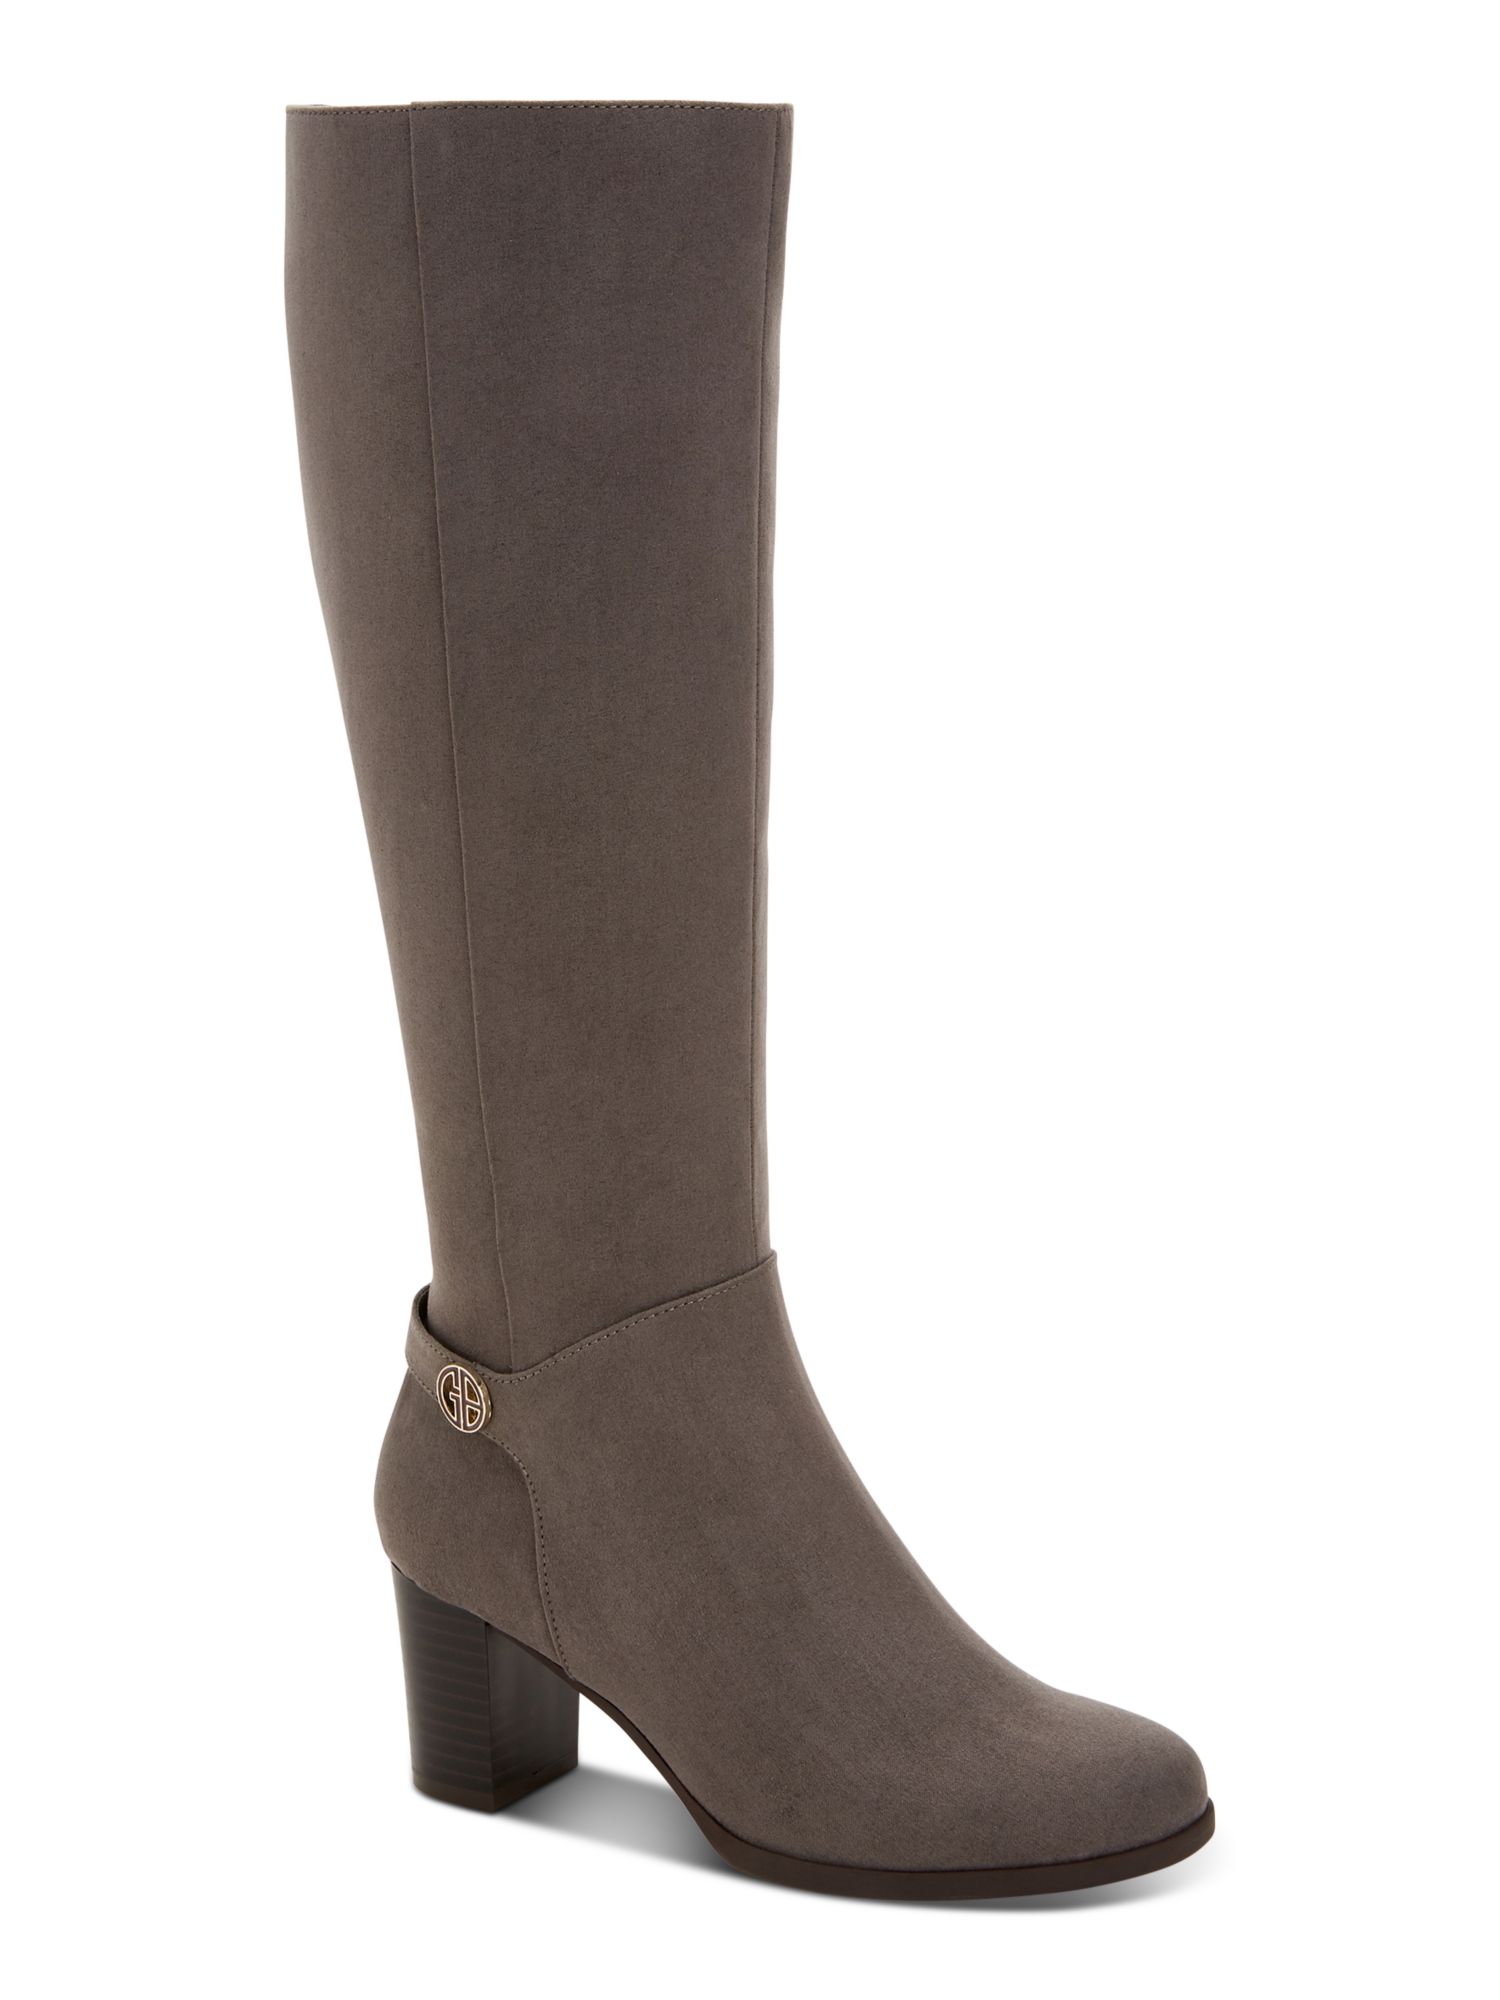 GIANI BERNINI Womens Brown Slip Resistant Goring Adonnys Round Toe Block Heel Zip-Up Dress Boots 10 M